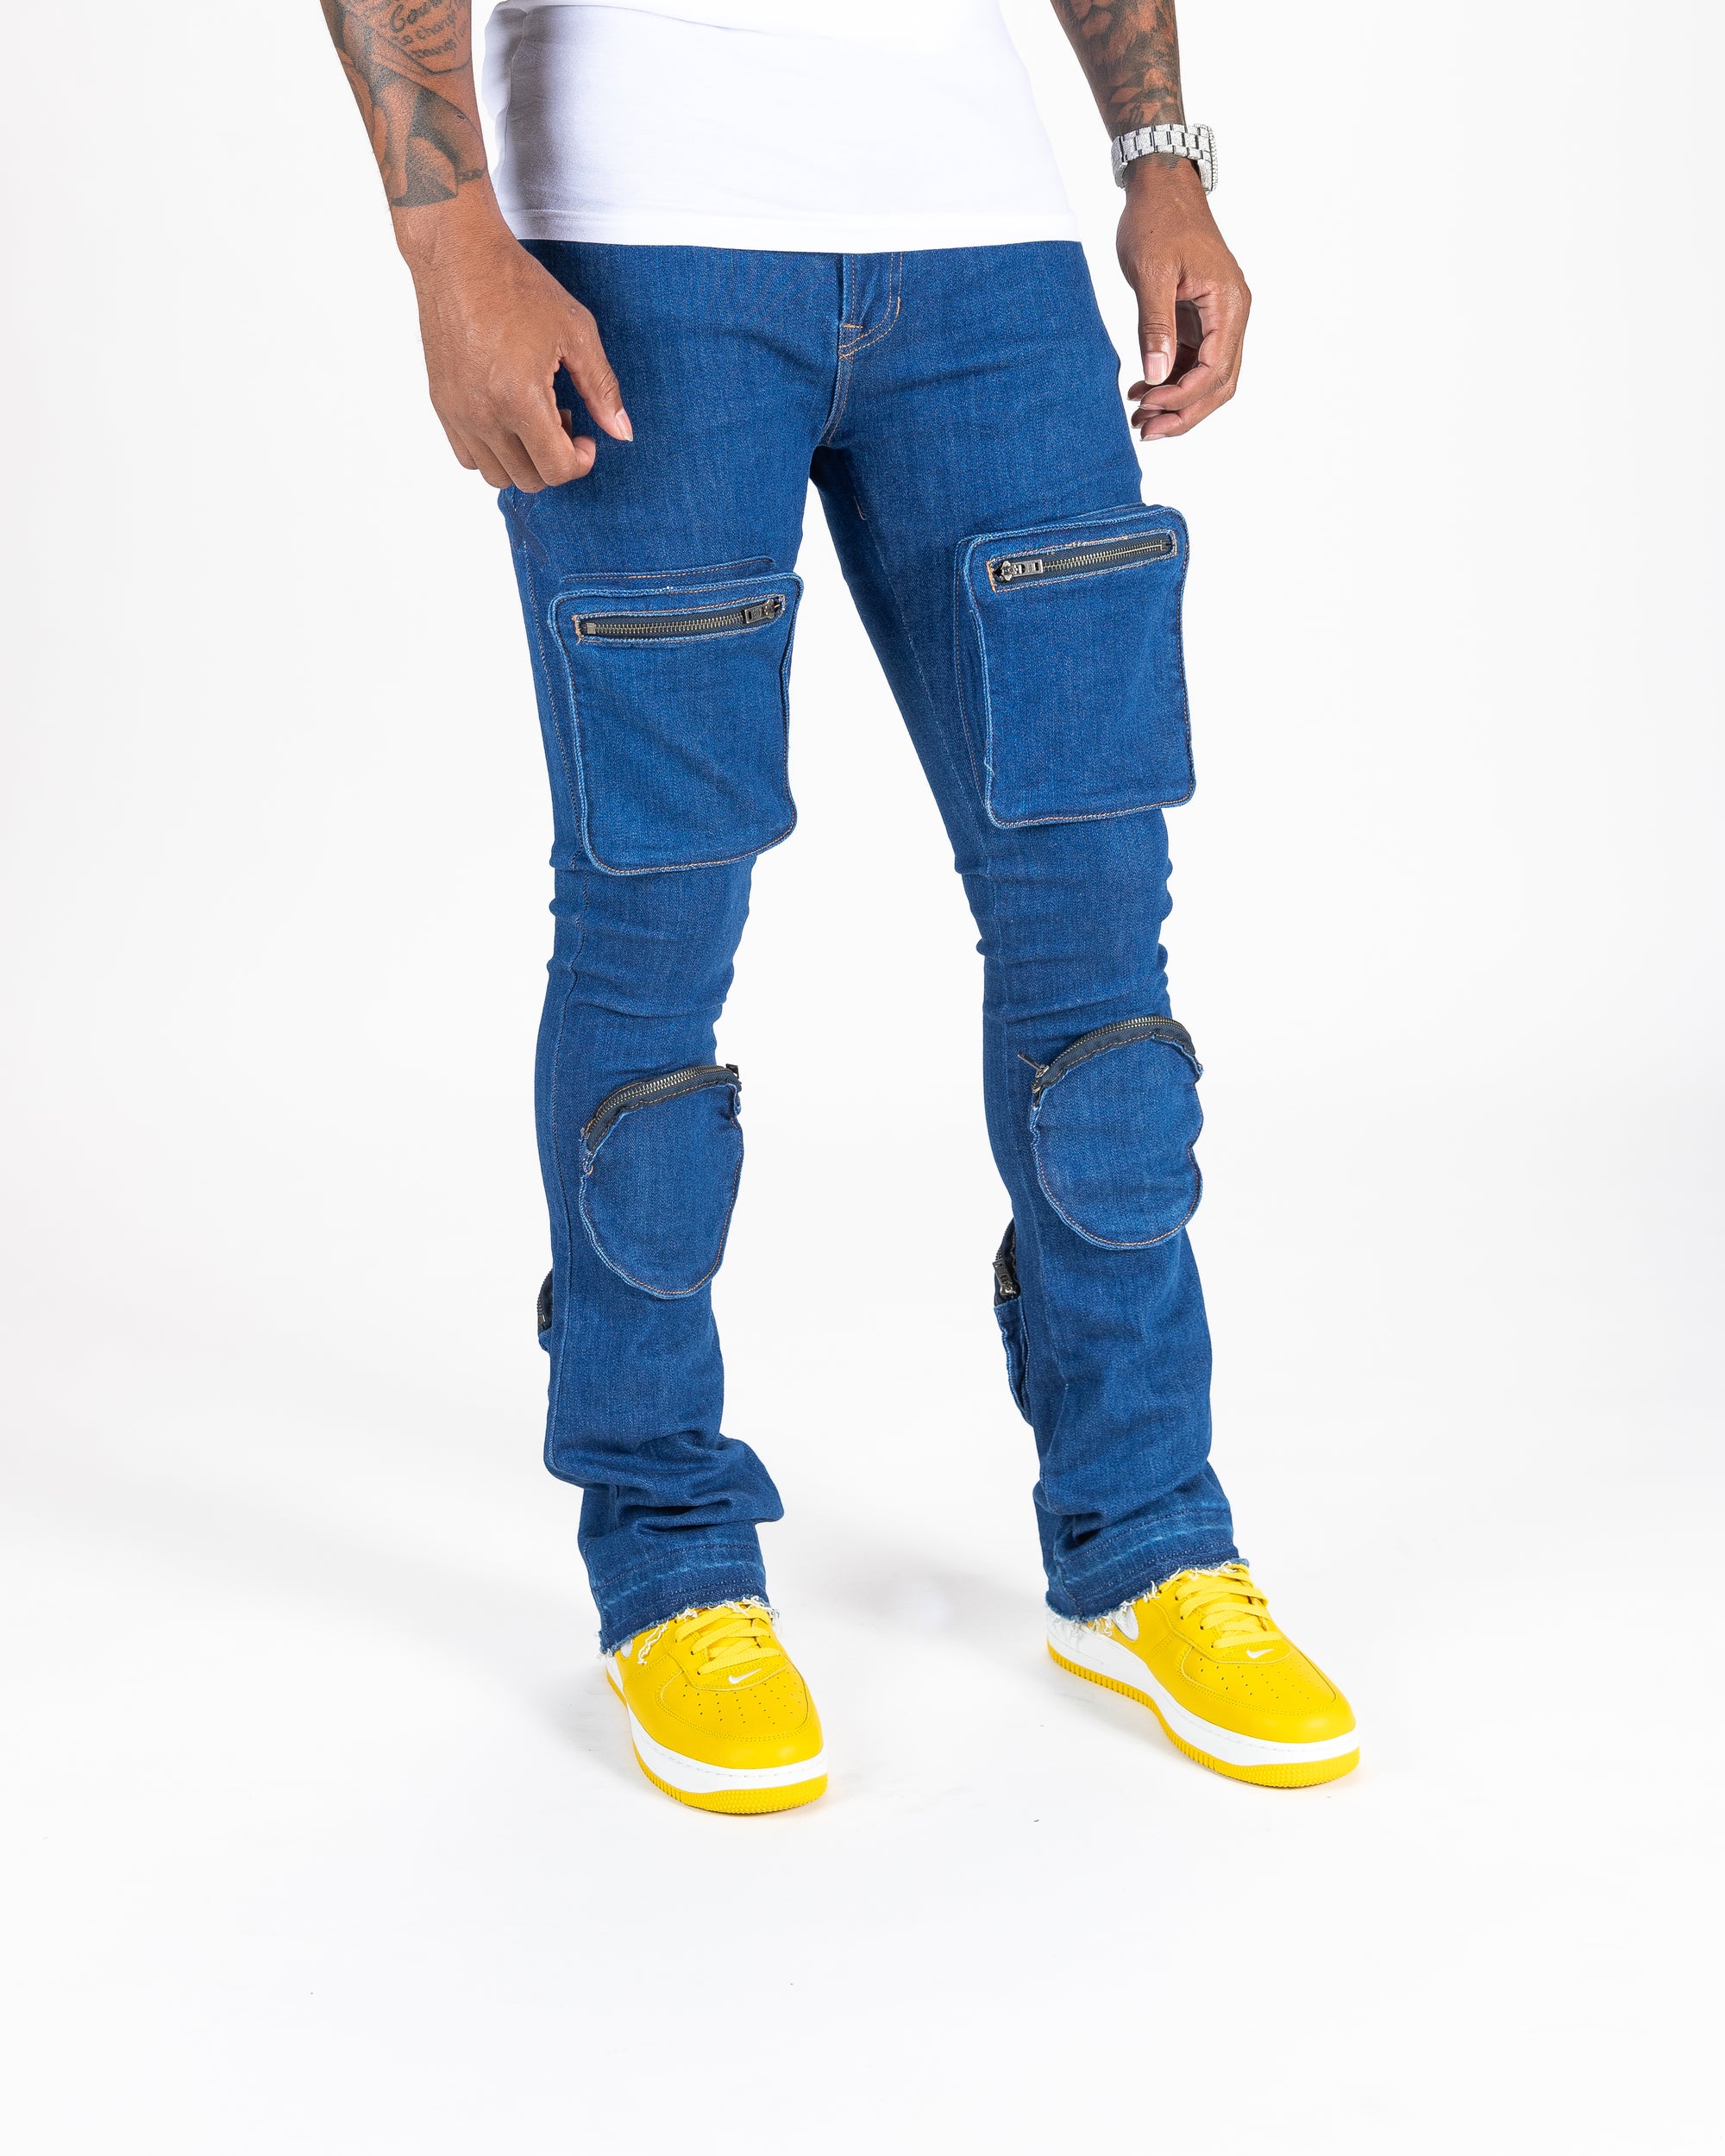 Strapped Up Slim Utility Jeans Black Denim Yellow - ShopperBoard